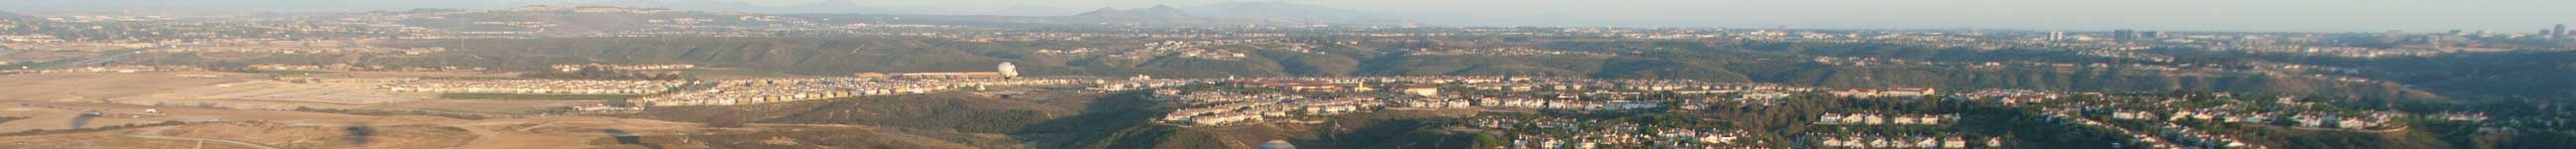 Santa Ana in a panorama